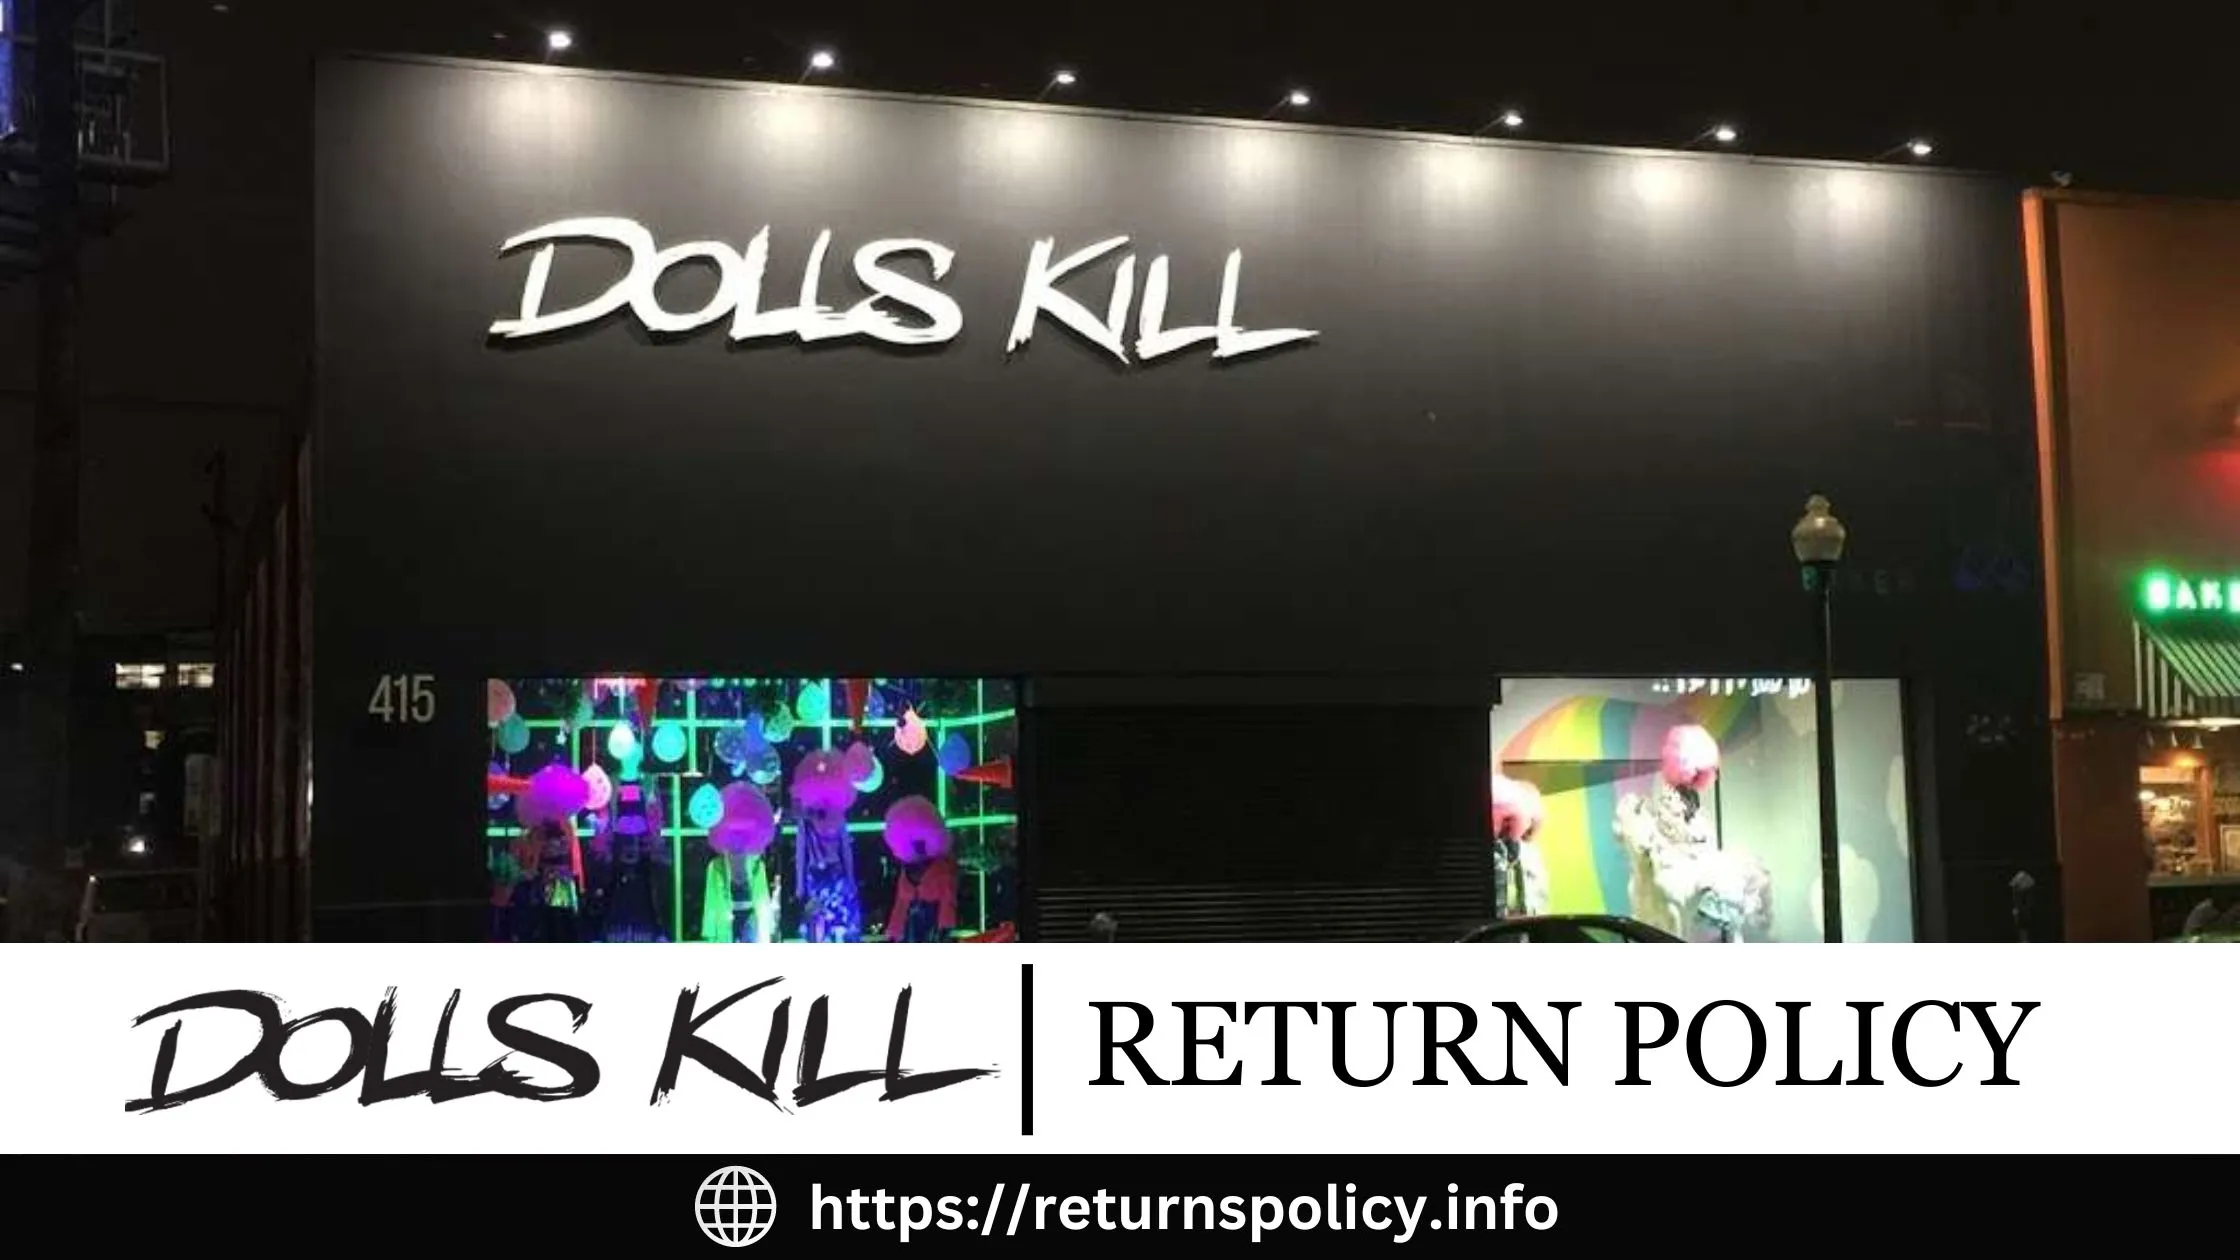 Dolls Kill Return Policy